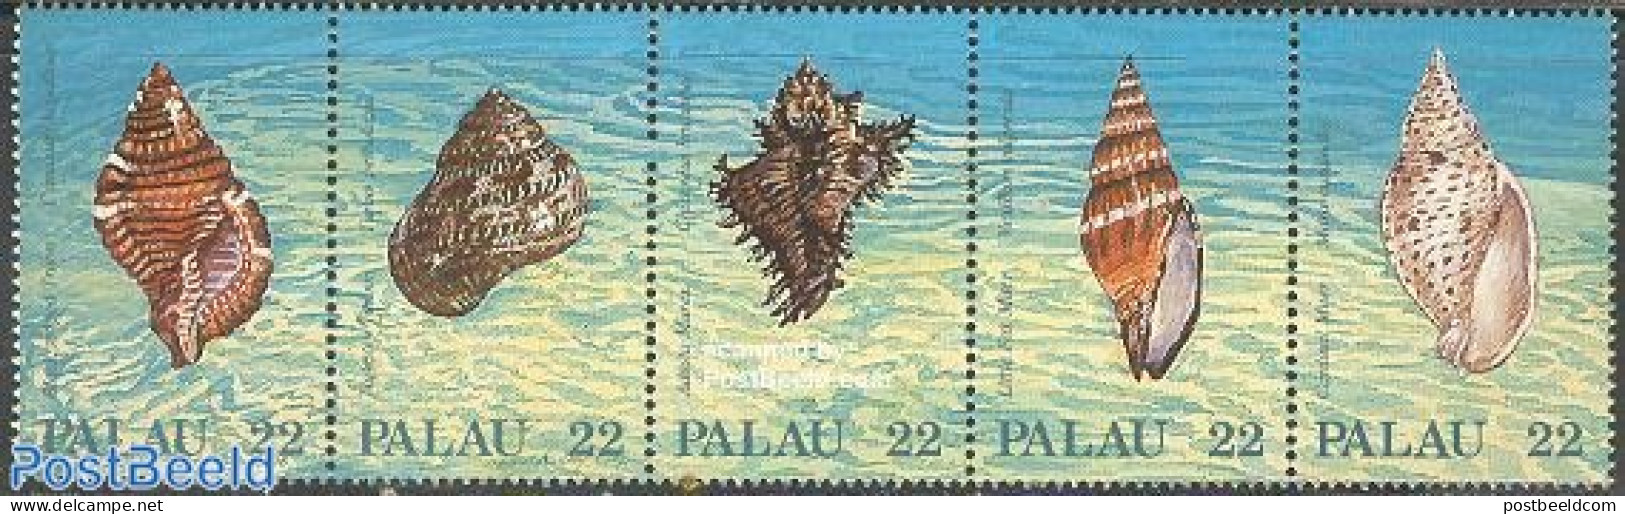 Palau 1987 Shells 5v [::::], Mint NH, Nature - Shells & Crustaceans - Marine Life